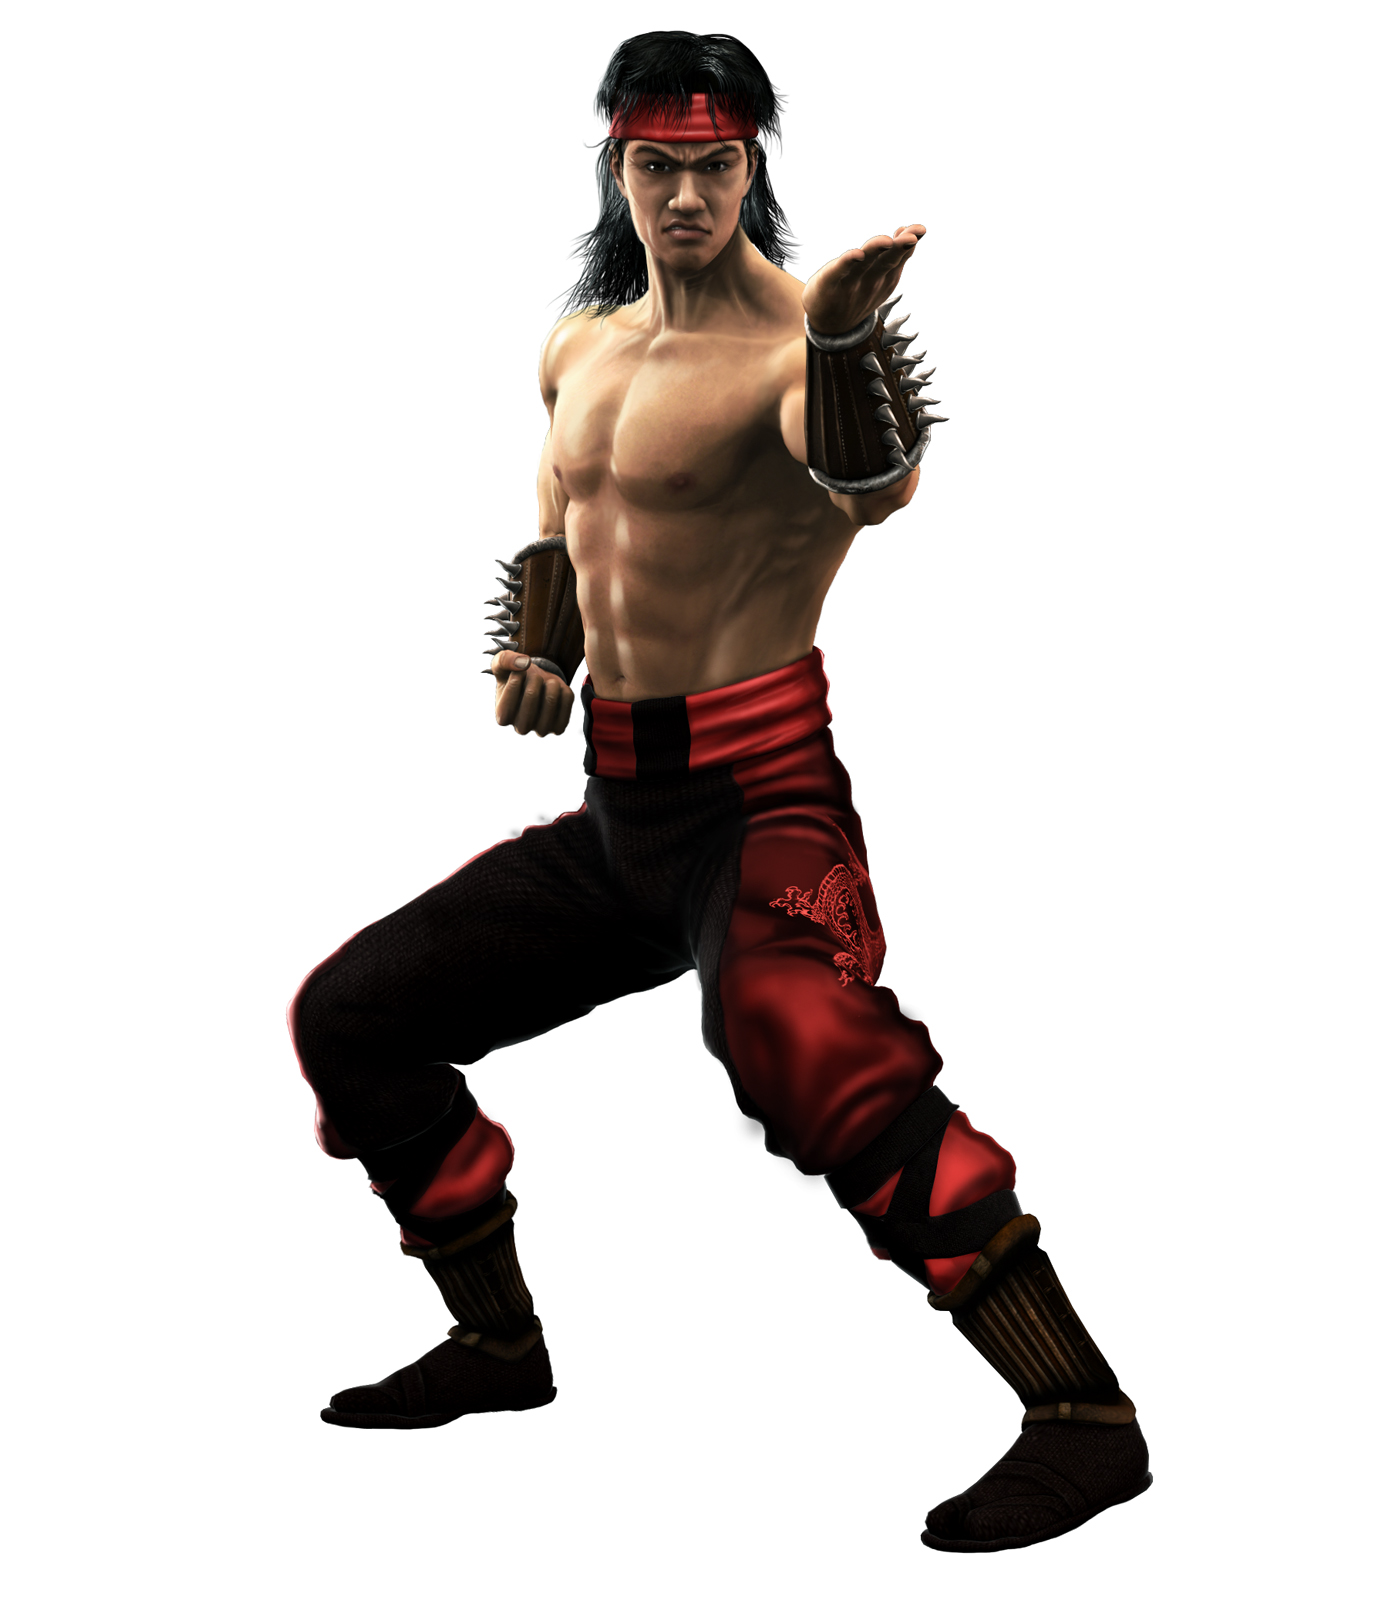 Liu Kang (Mortal Kombat)